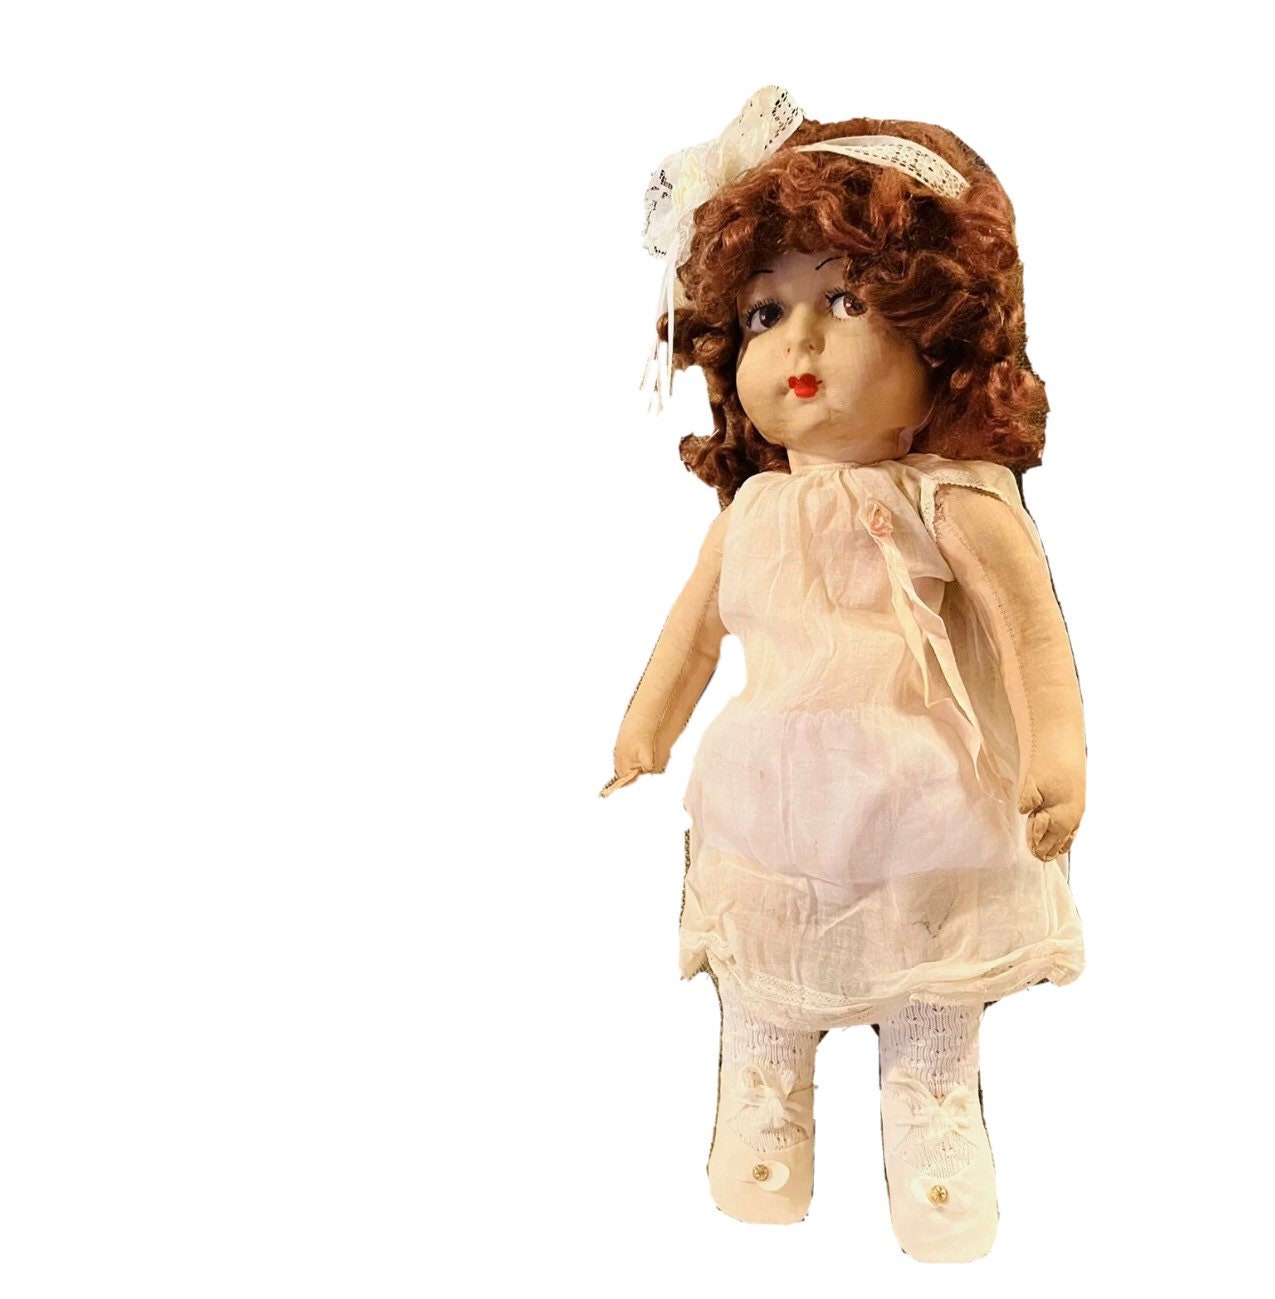 Antique Gre Poir 17” Doll, French, Pressed Cloth, 1920s, Auburn Hair, Brown Eyes, Rare - A. Mandaline Art